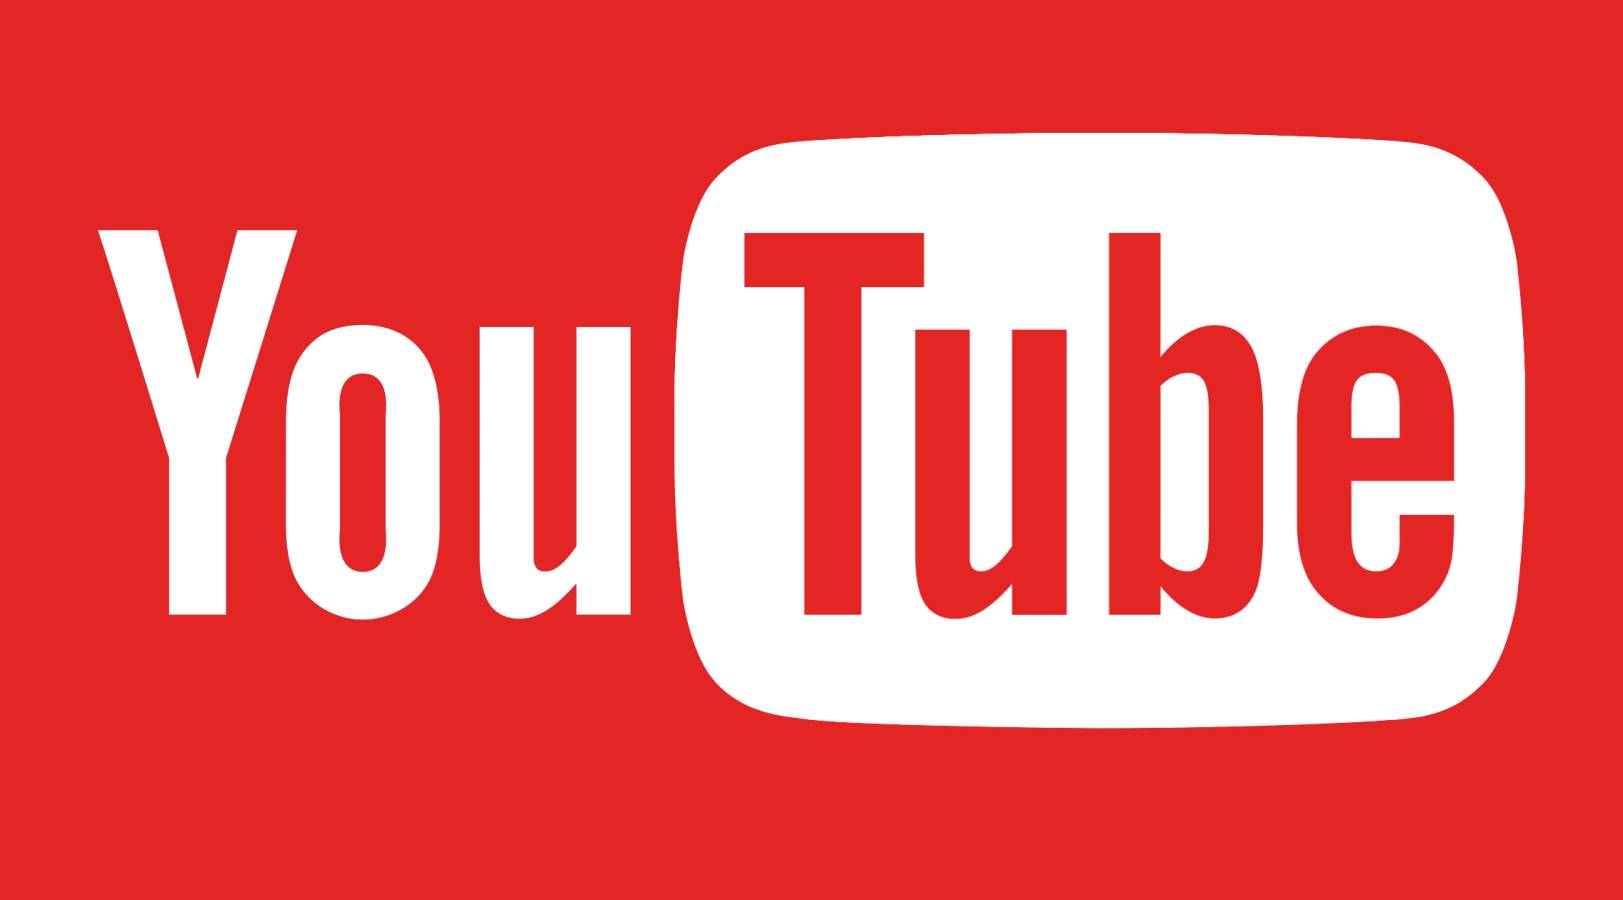 YouTube Actualizarea Noua Lansata, ce Schimbari Aduce Azi